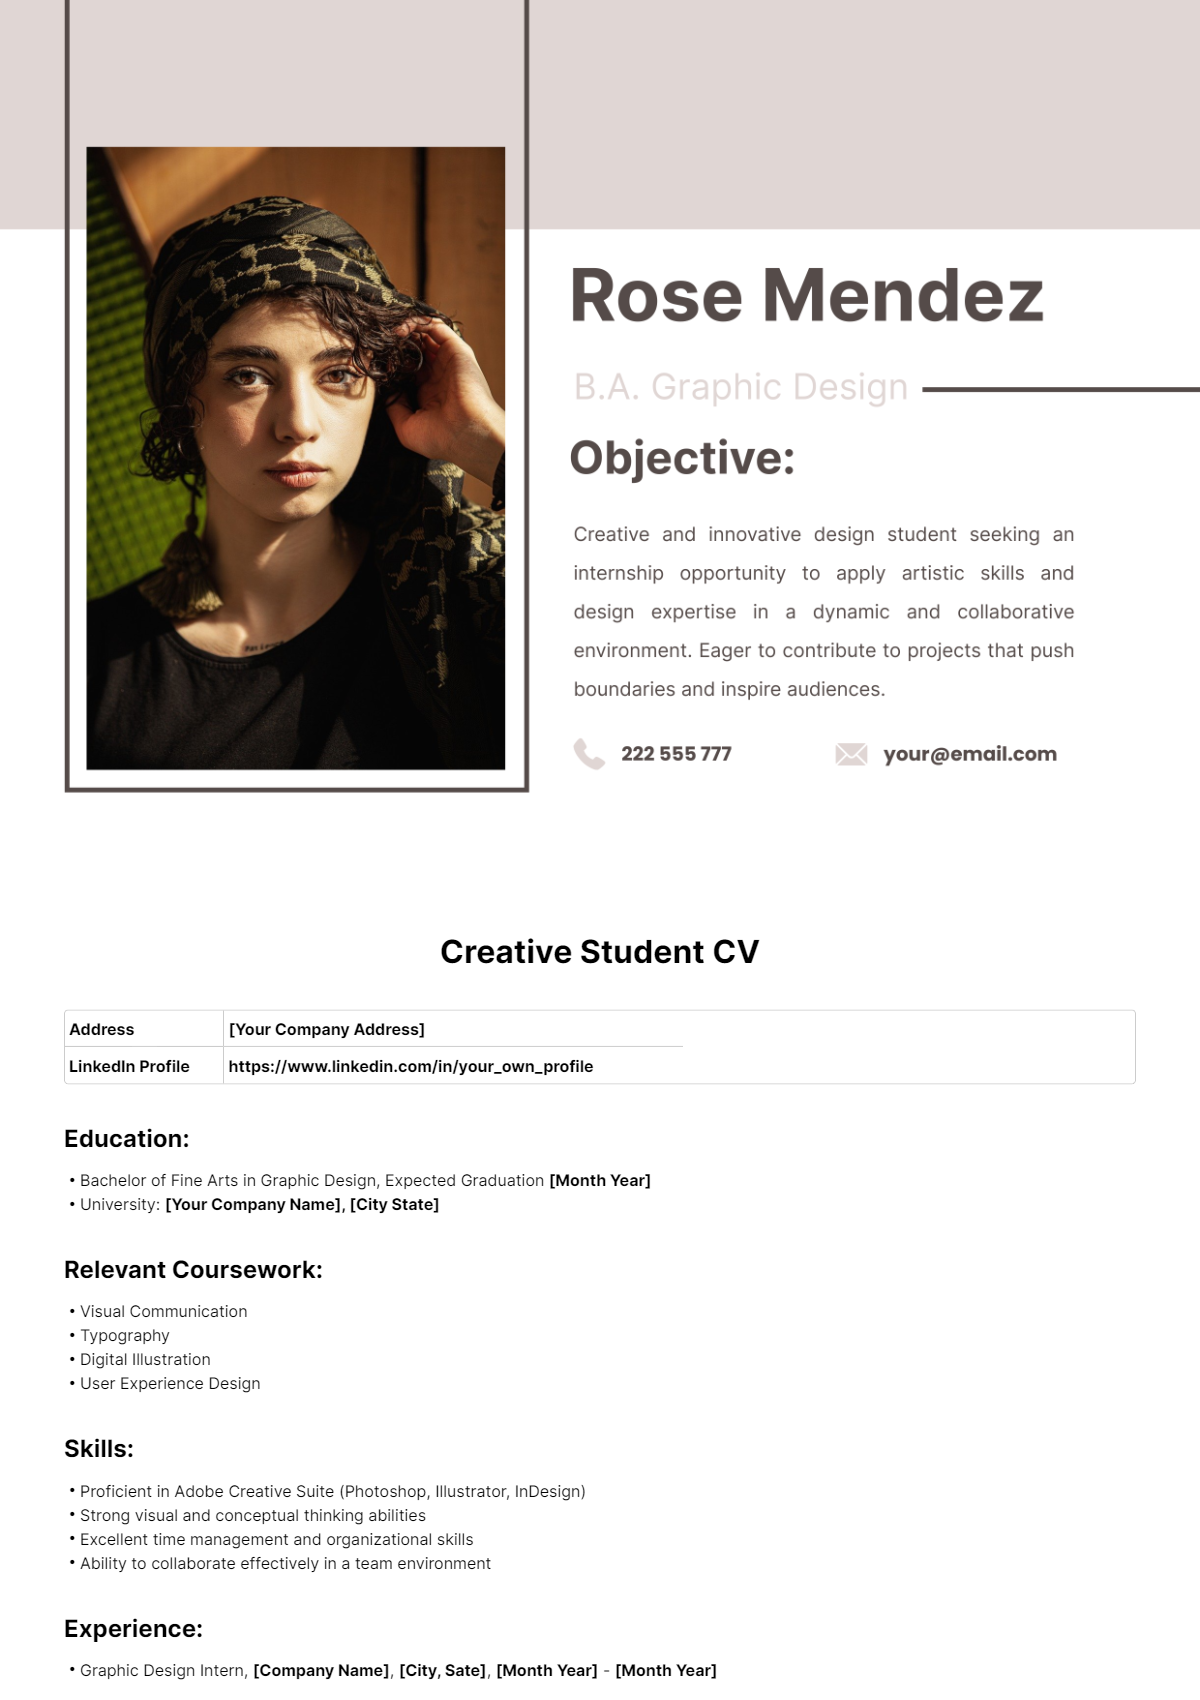 Creative Student CV Template